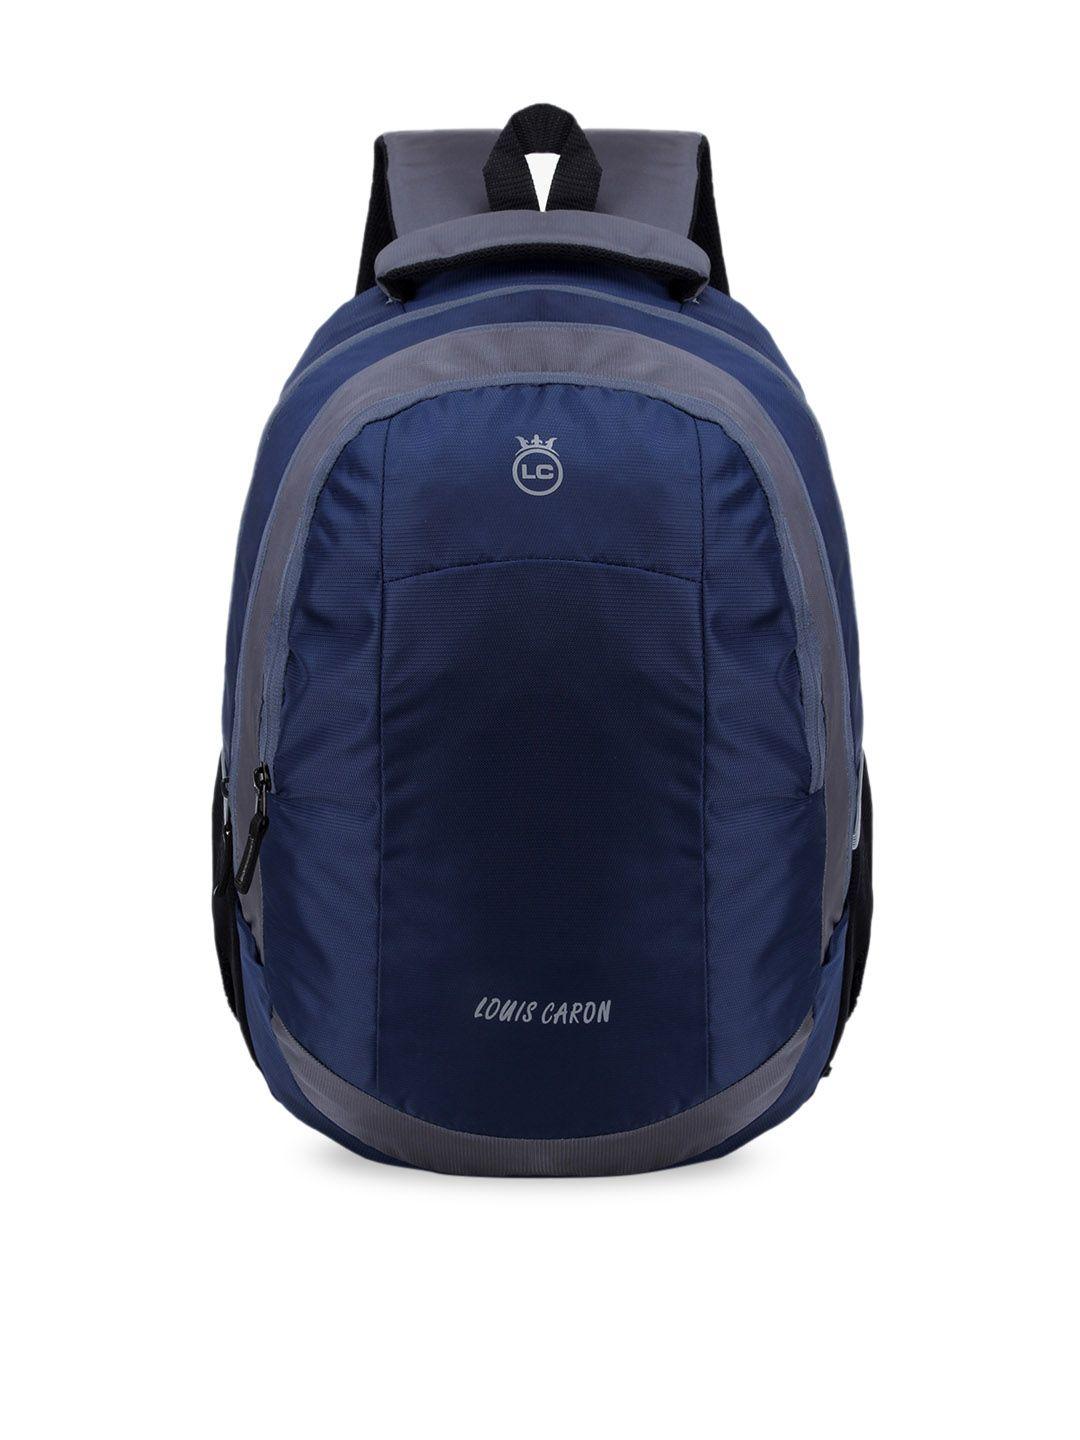 louis caron unisex navy blue & grey brand logo backpack